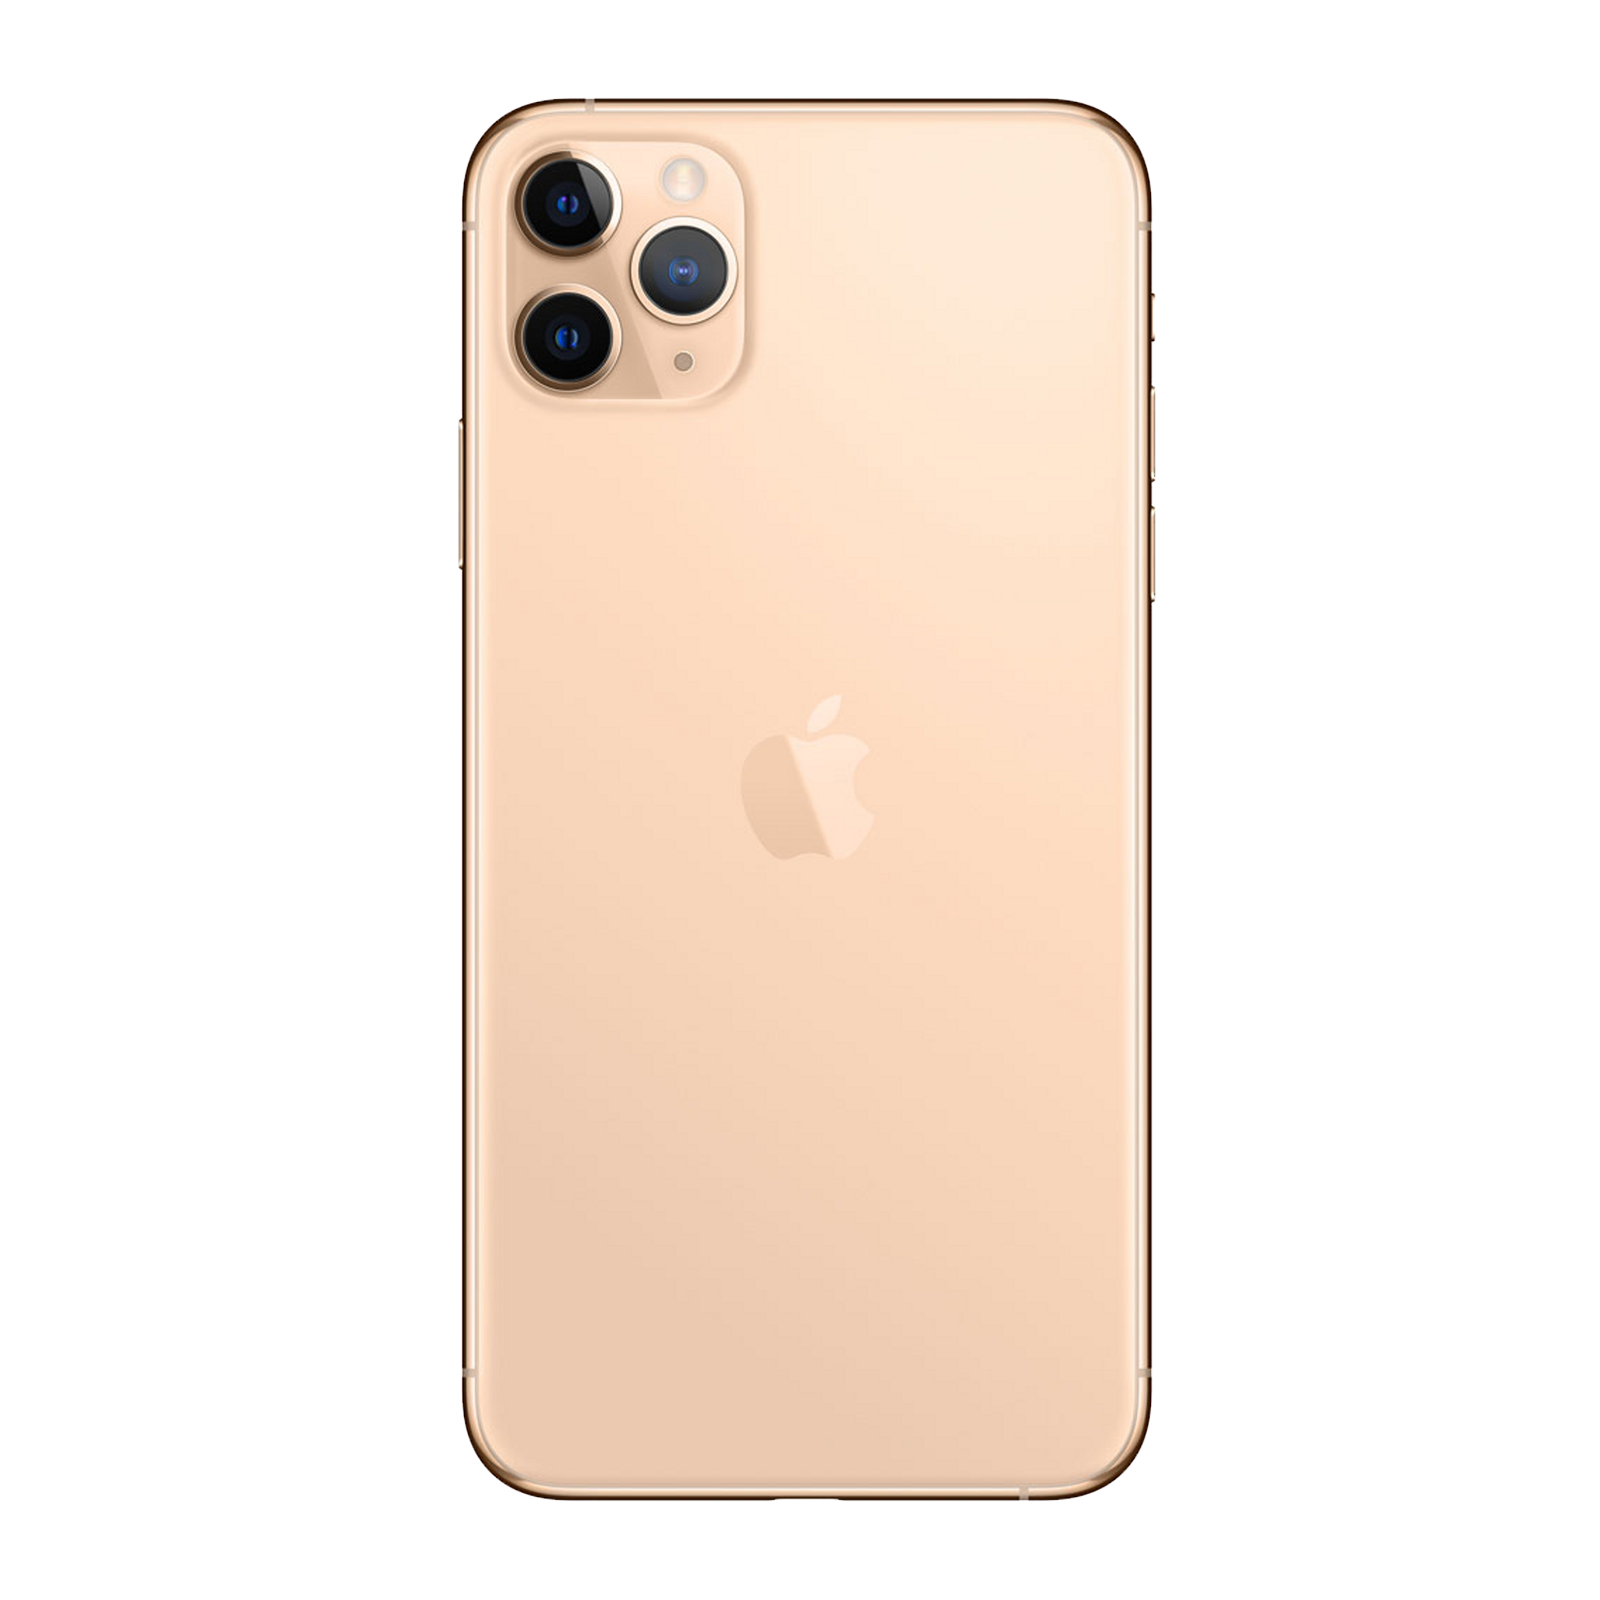 Apple iPhone 11 Pro Max 512GB Gold Pristine - AT&T